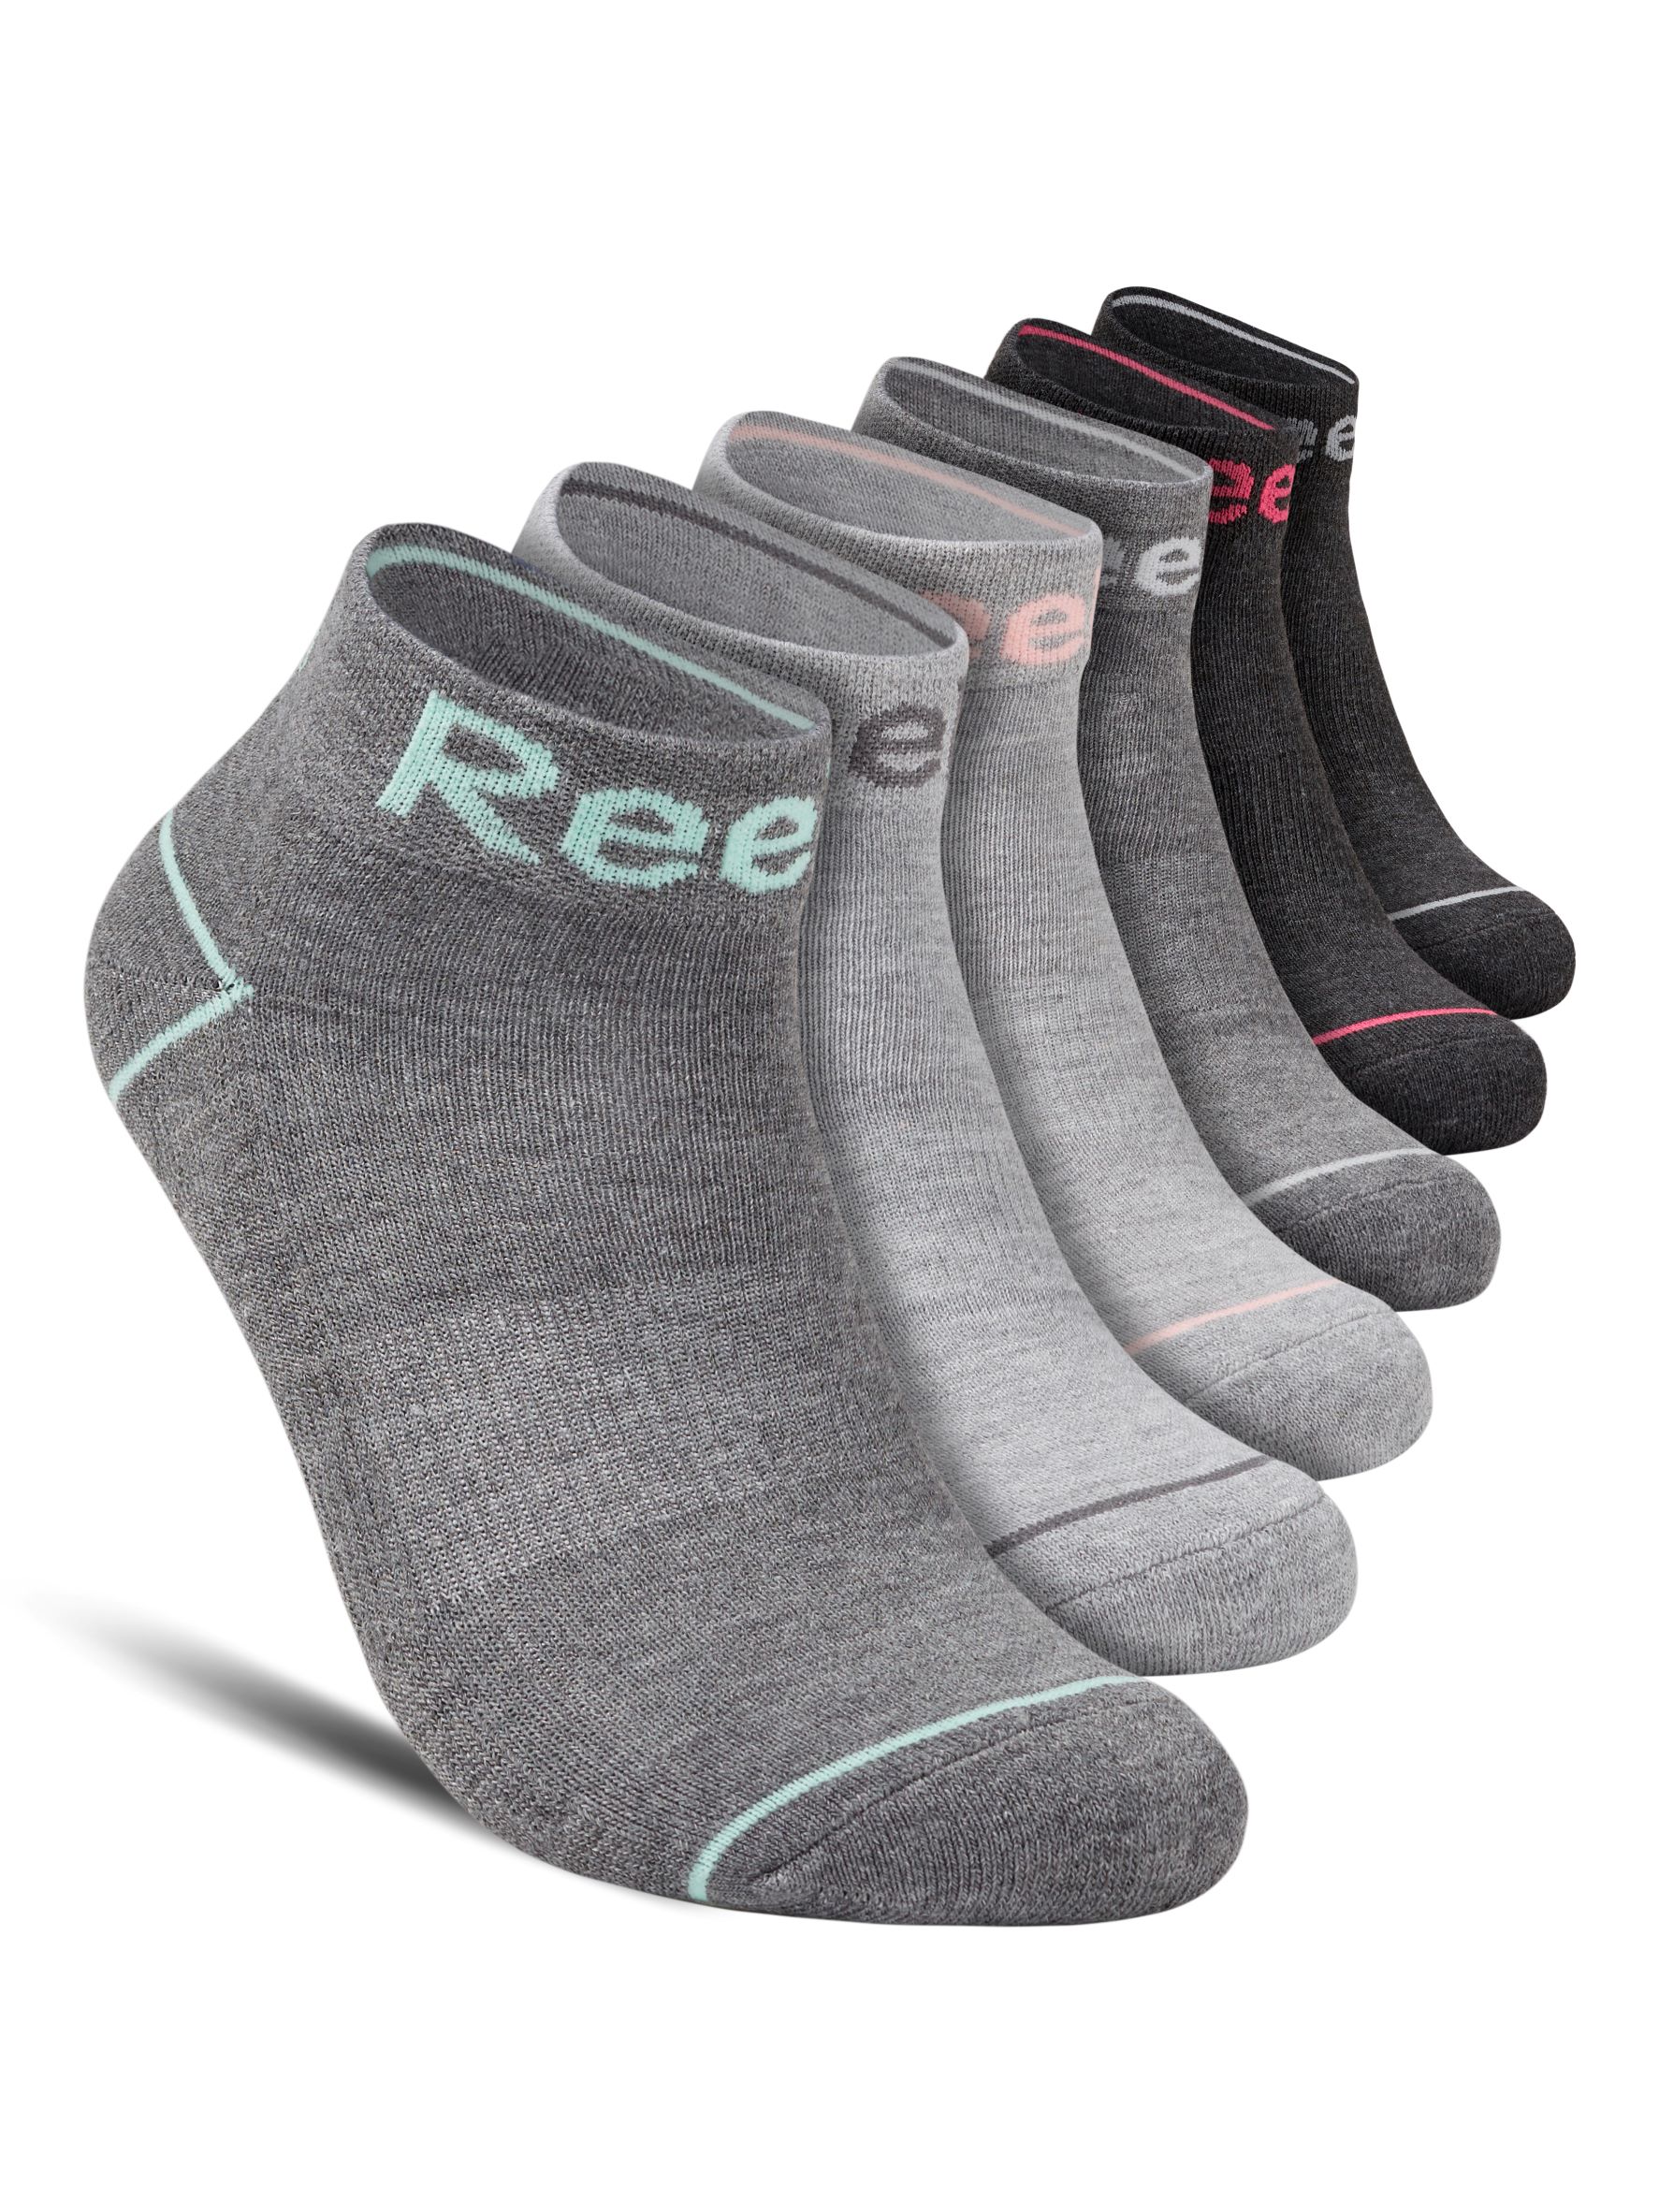 Reebok Women's Cushion Quarter Socks, 6-Pack - image 1 of 9